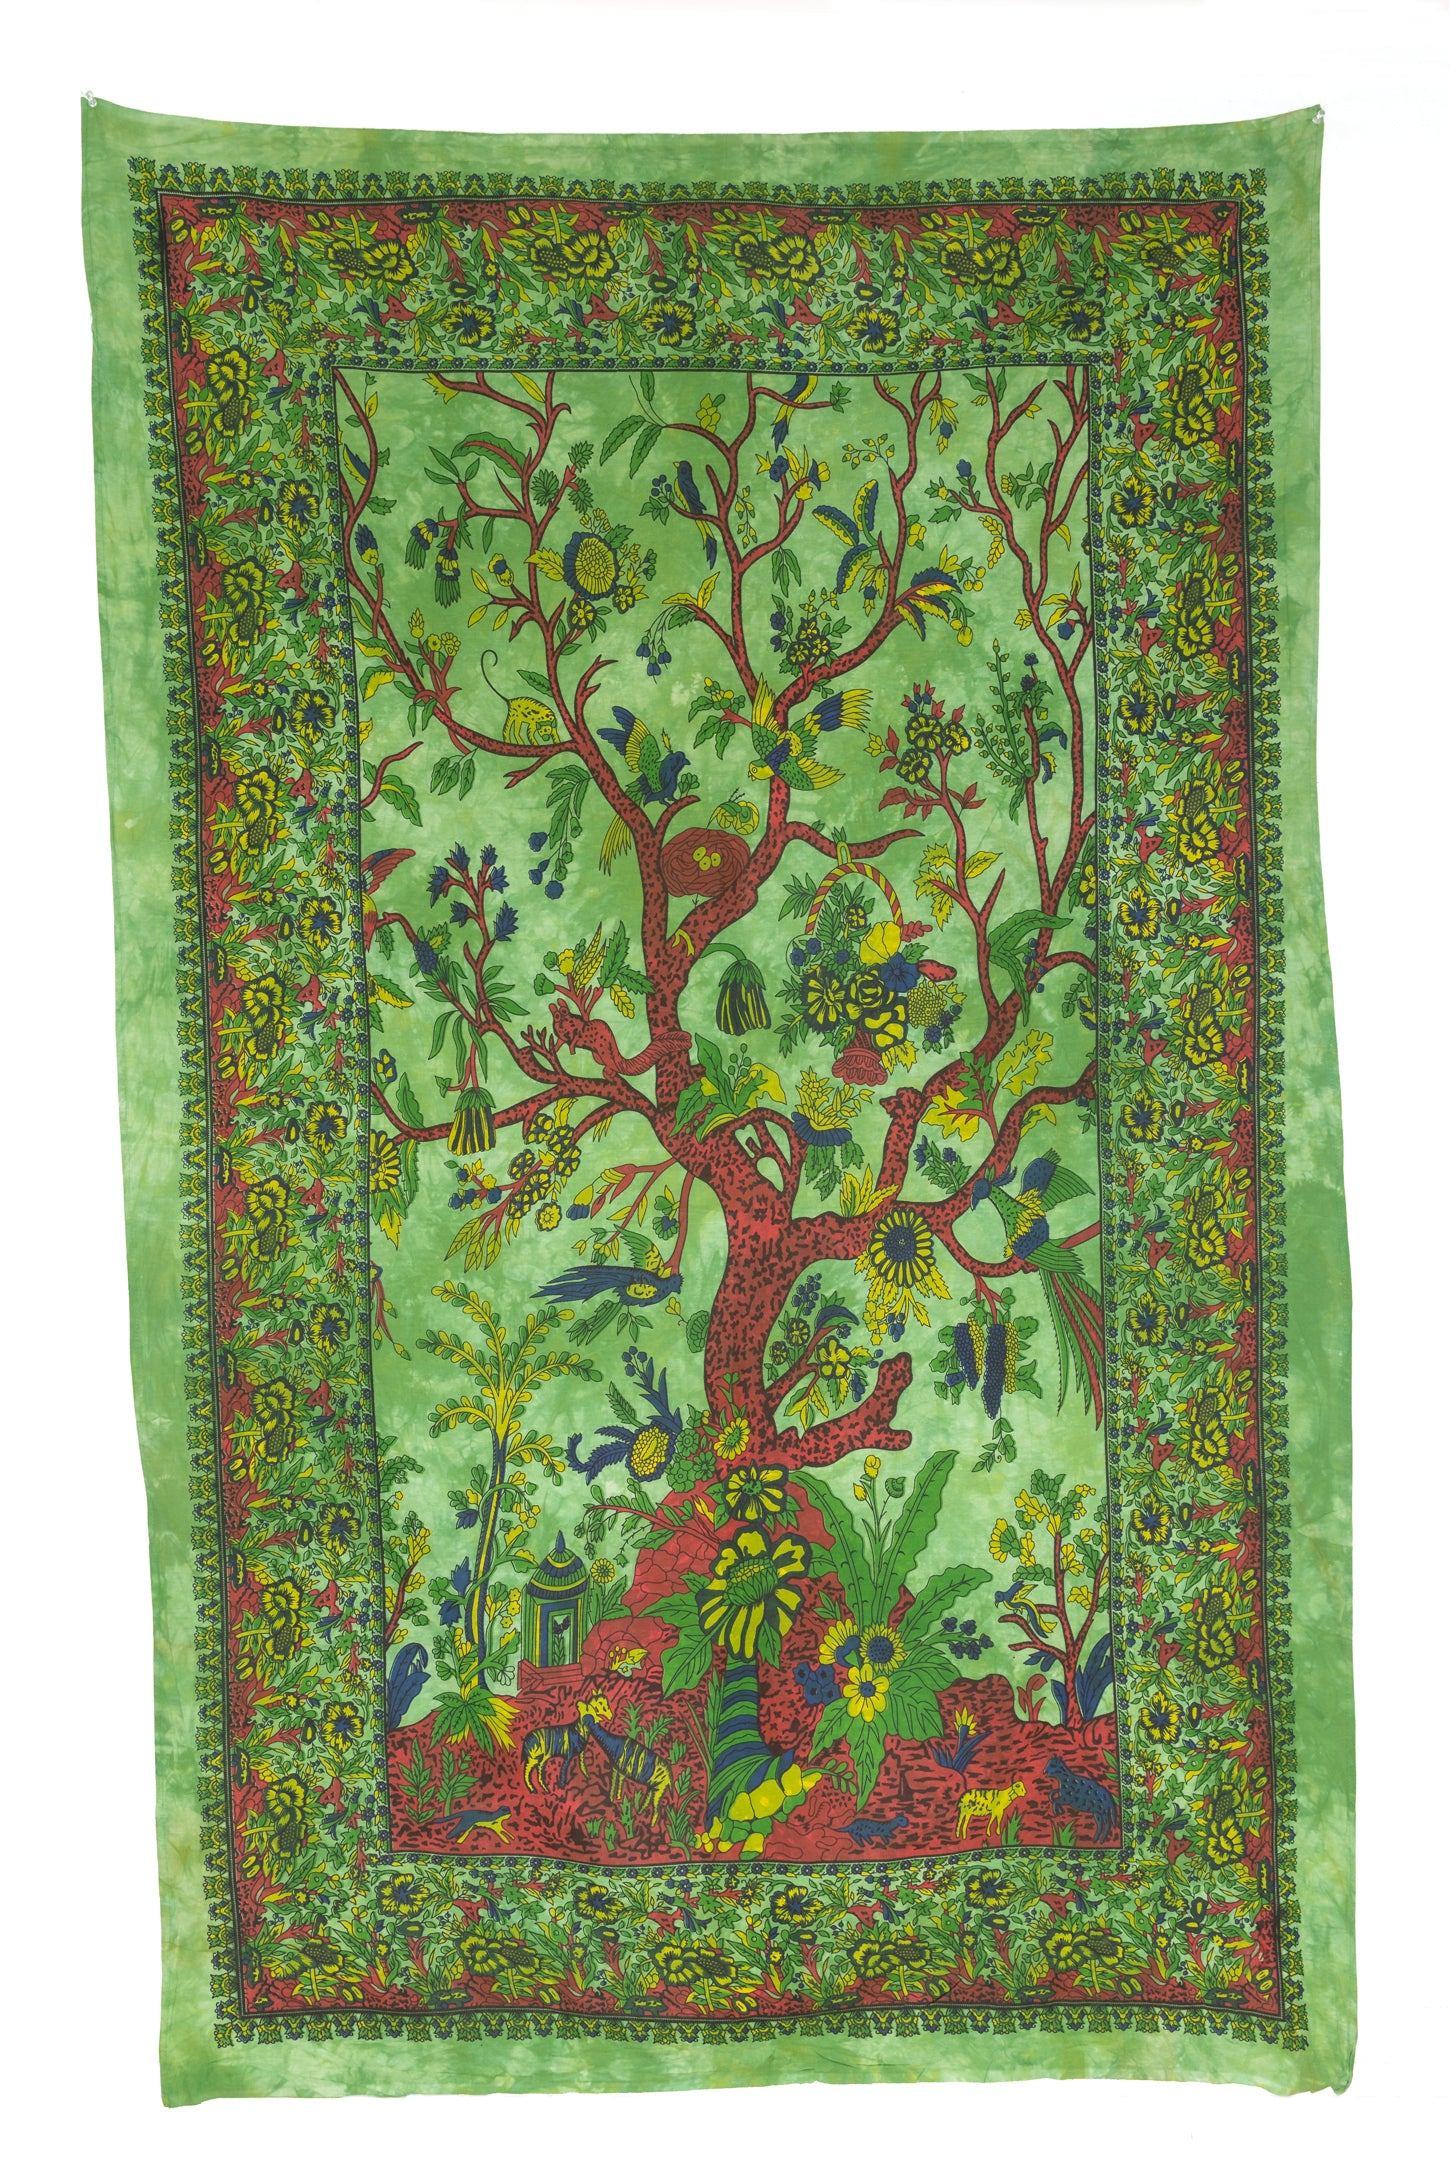 68x52 Arboles de la Vida Tree Of Life Latin Tapestry Wall Hanging – Tapestry  Shoppe